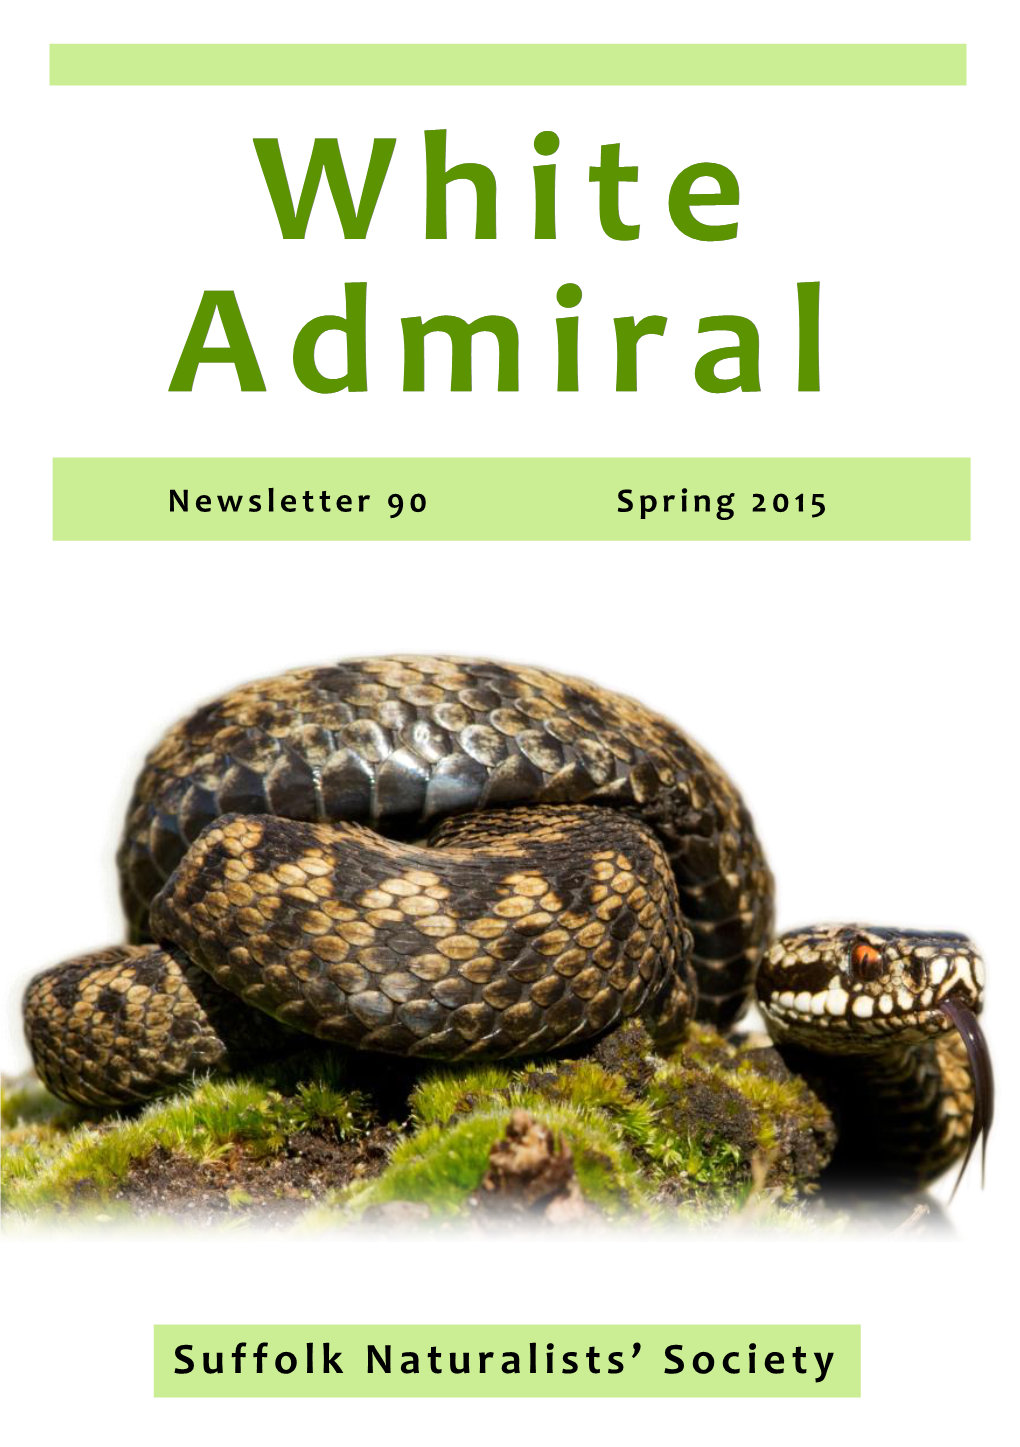 White Admiral Newsletter